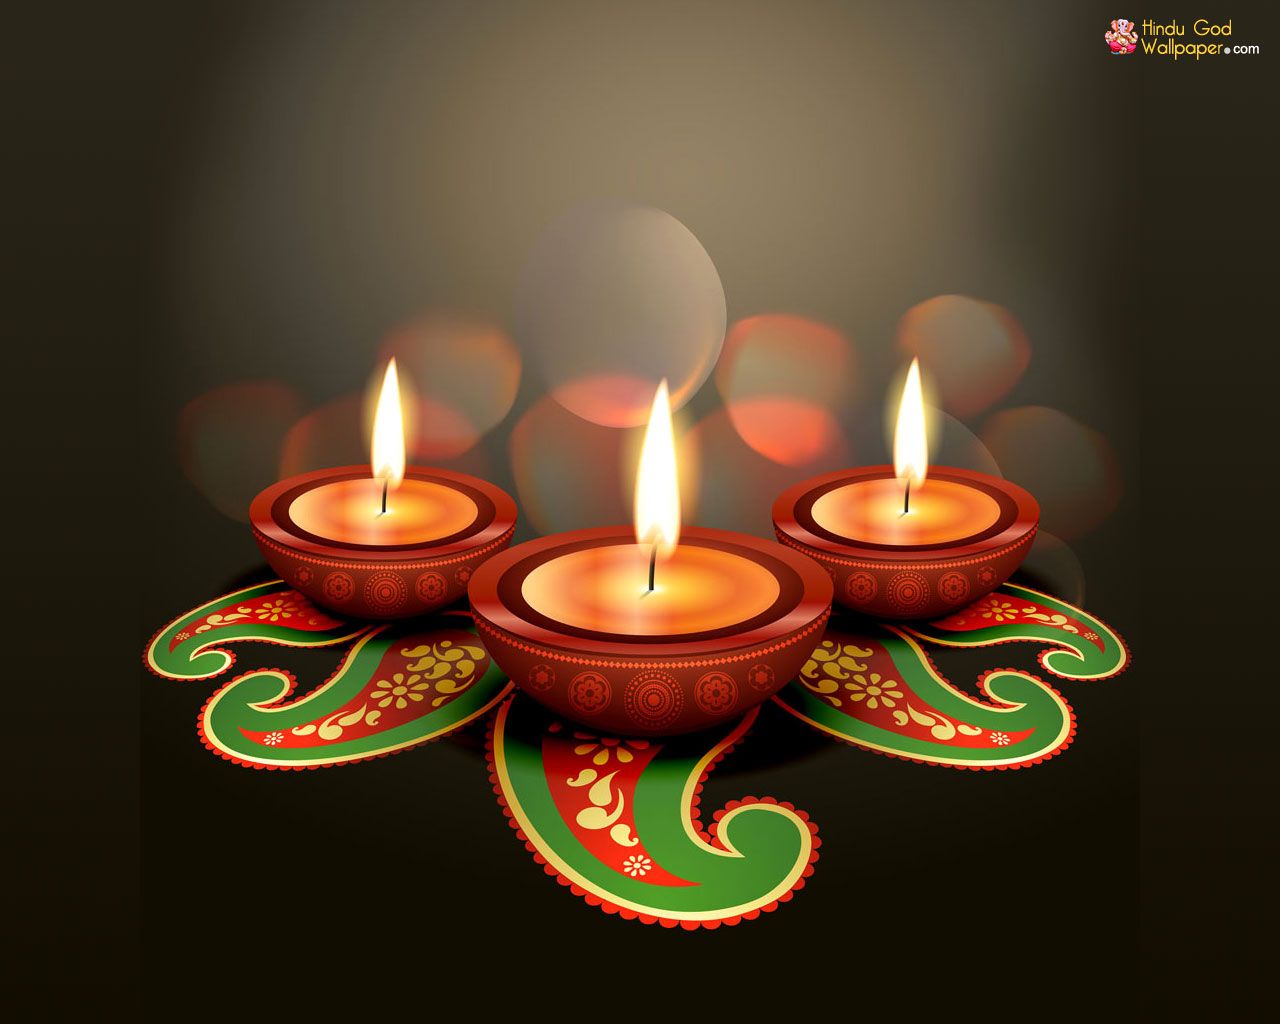 Diwali Diya Images Download - 1280x1024 Wallpaper 